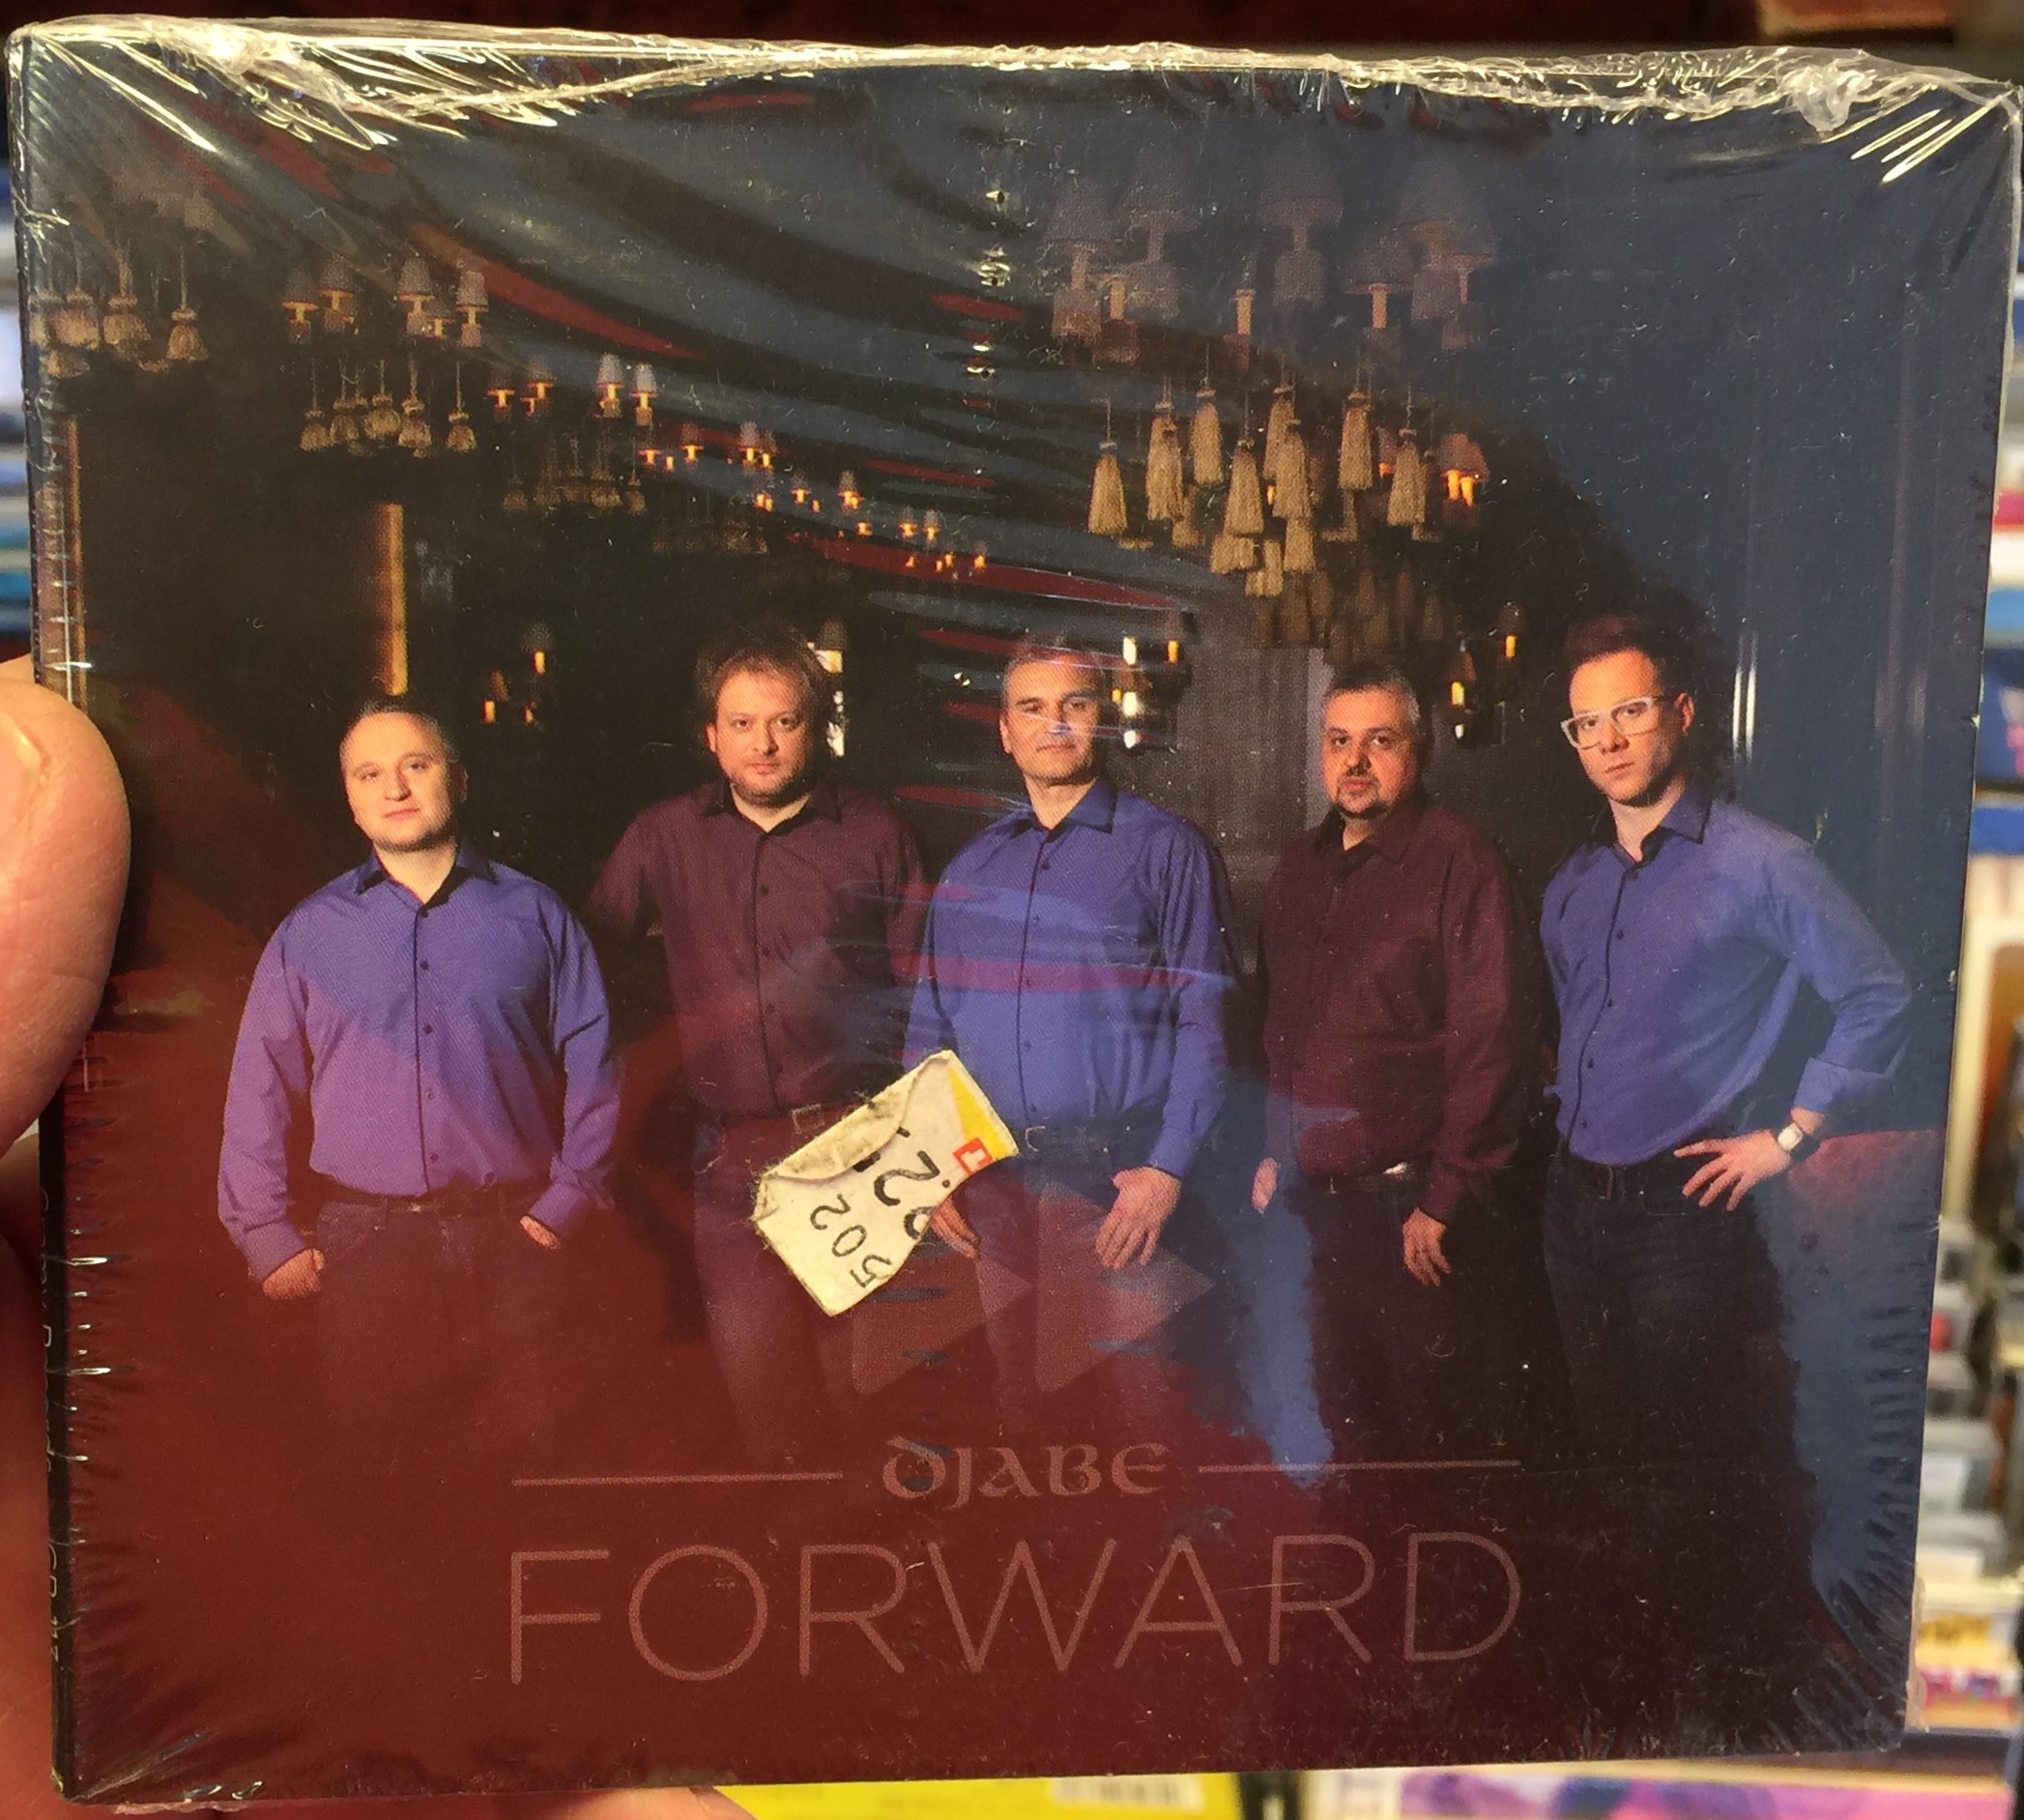 djabe-forward-gramy-records-audio-cd-2014-gr-113-1-.jpg